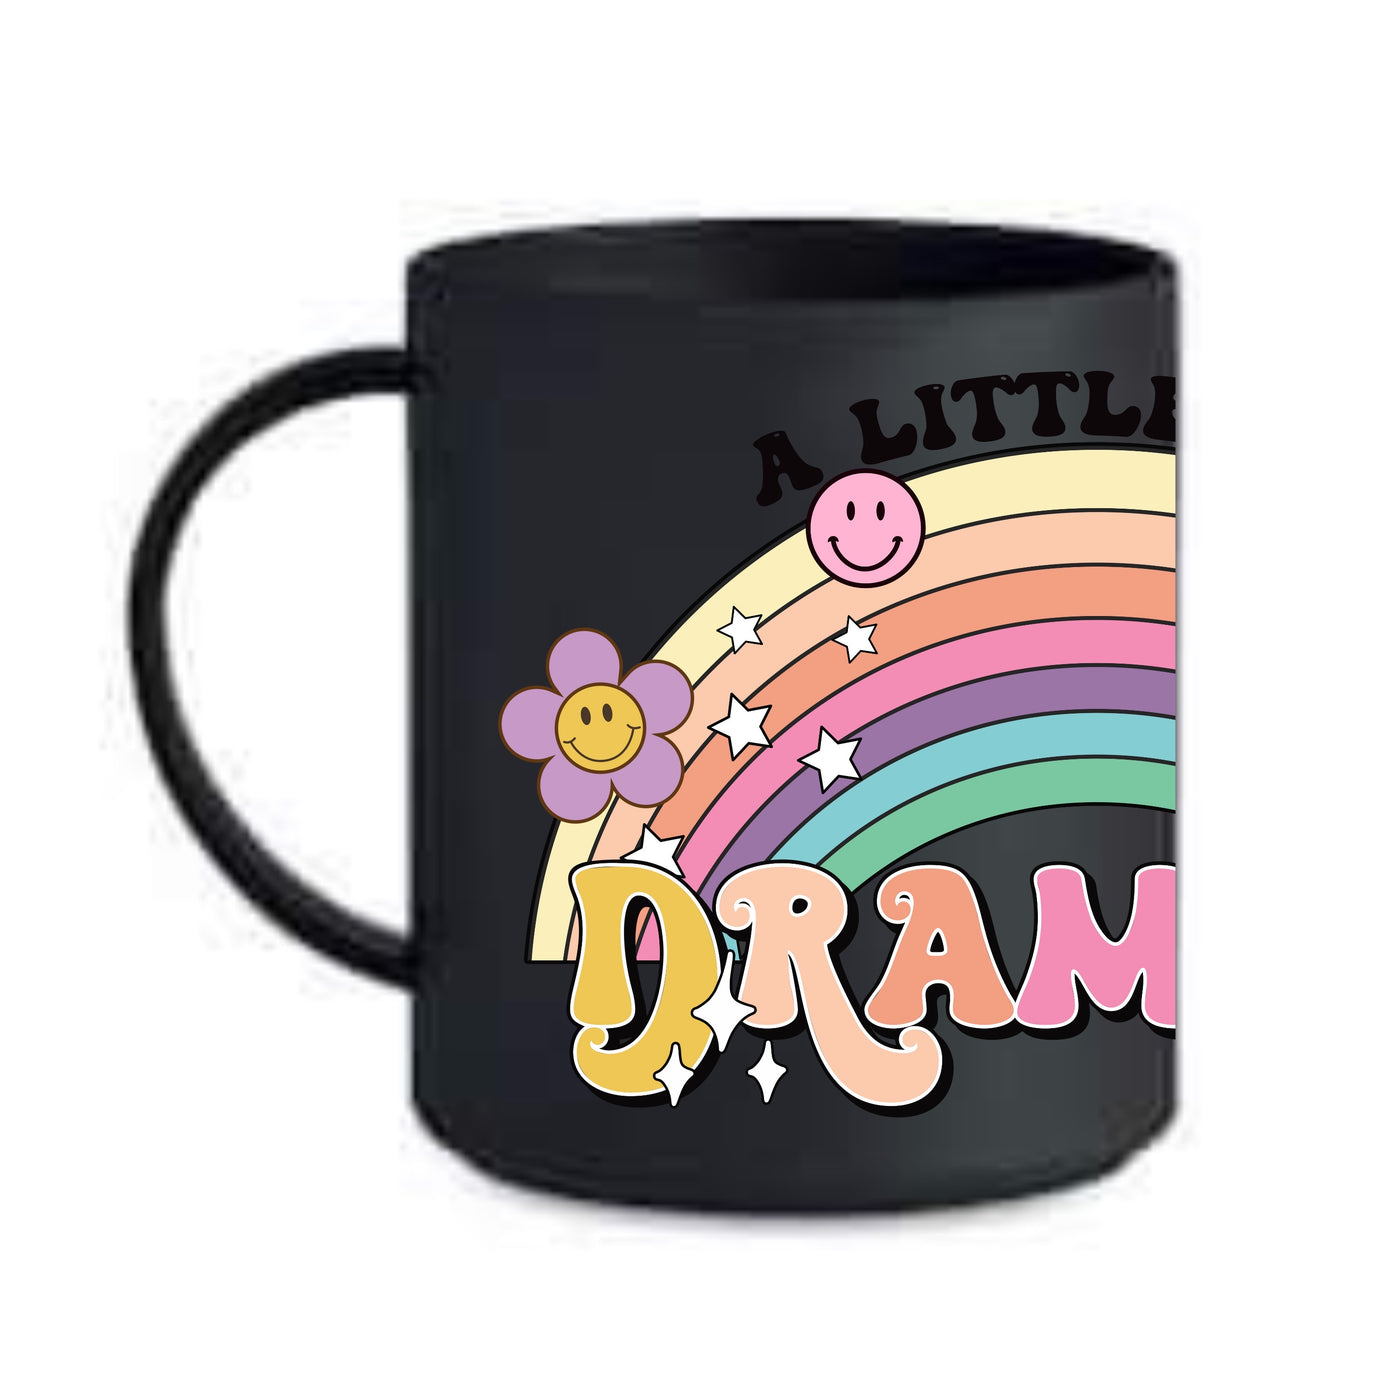 "Dramatic" 11oz Mug